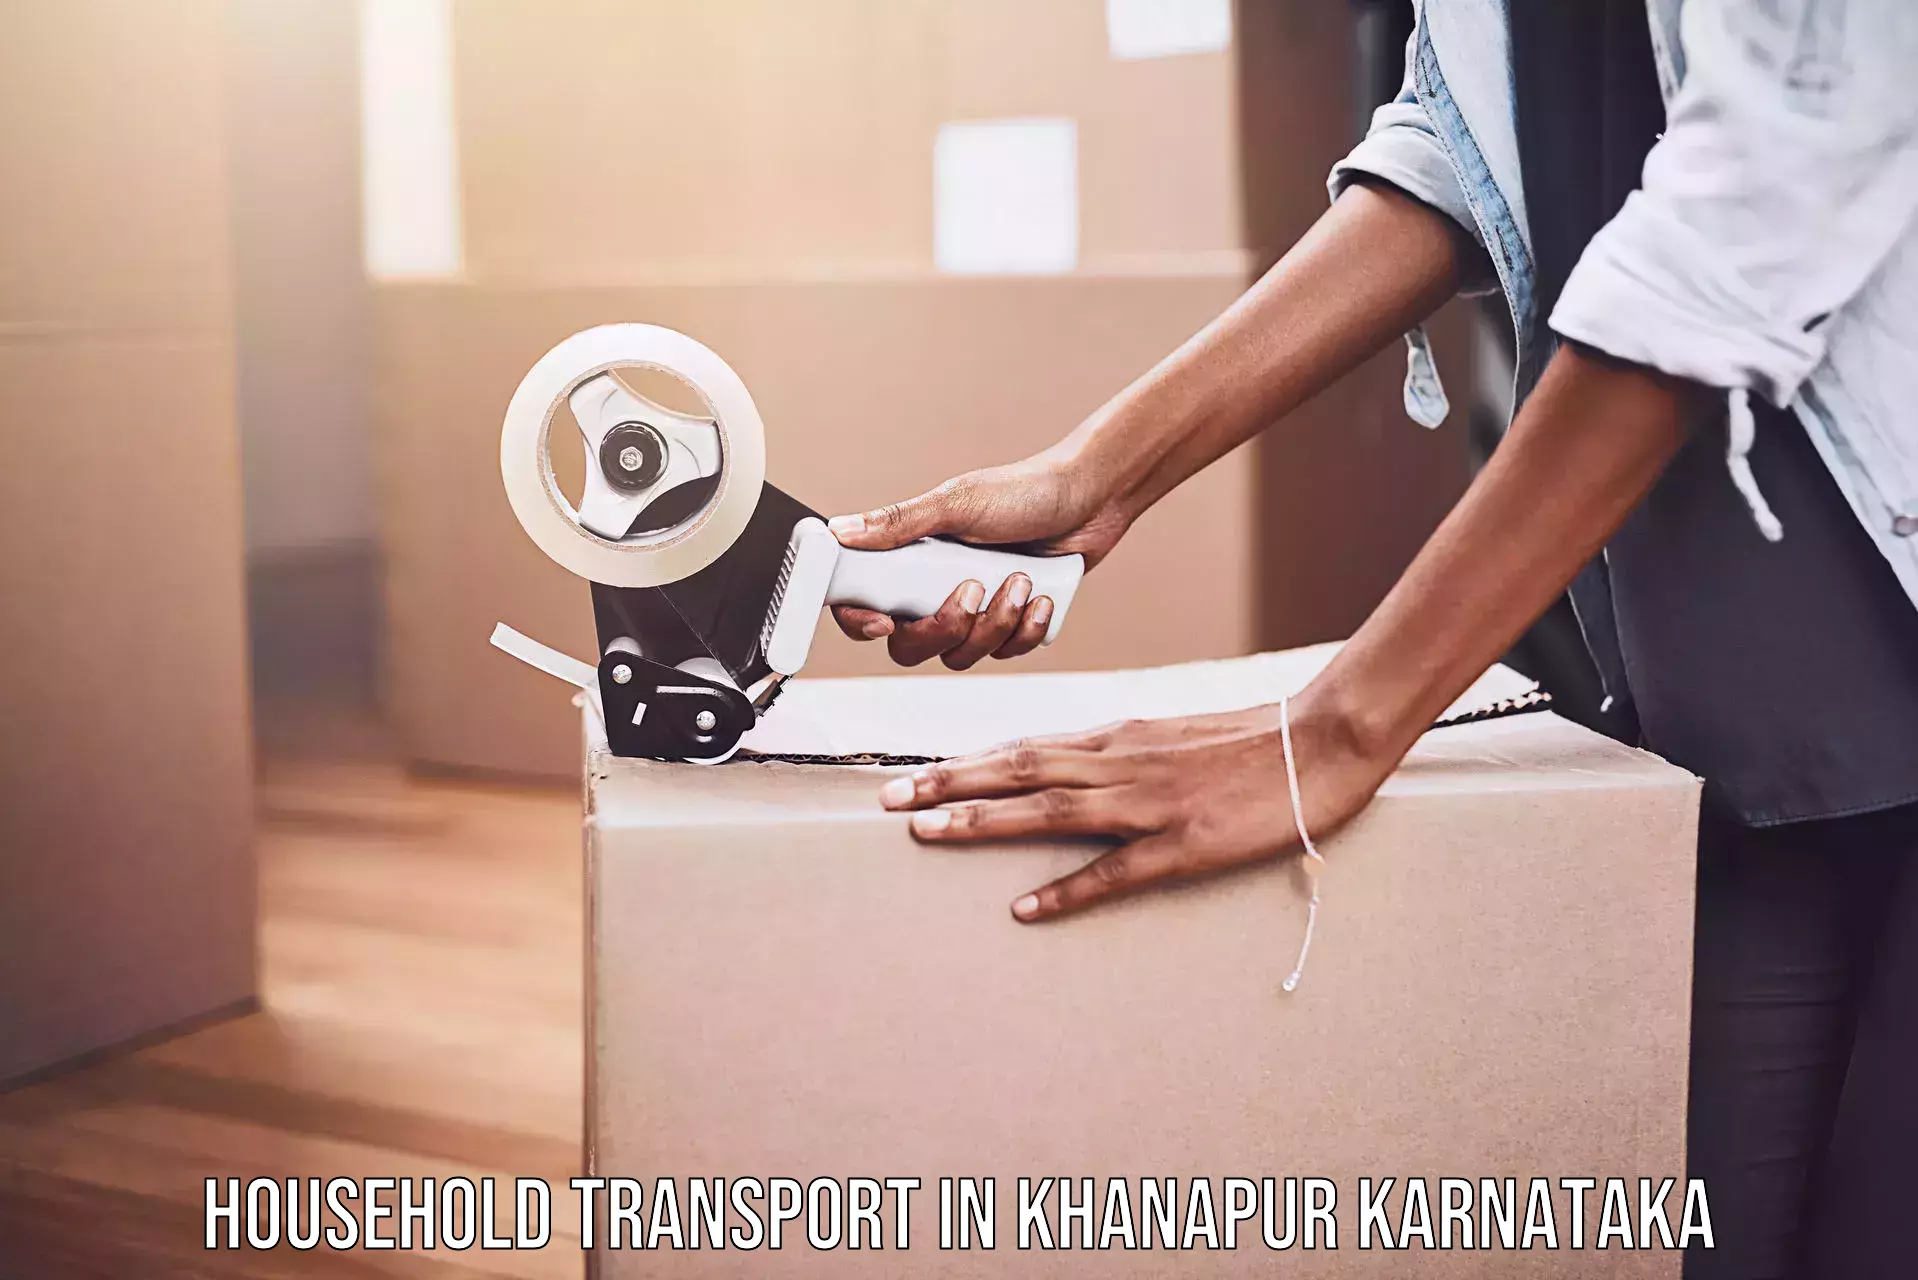 Professional packing and transport in Khanapur Karnataka